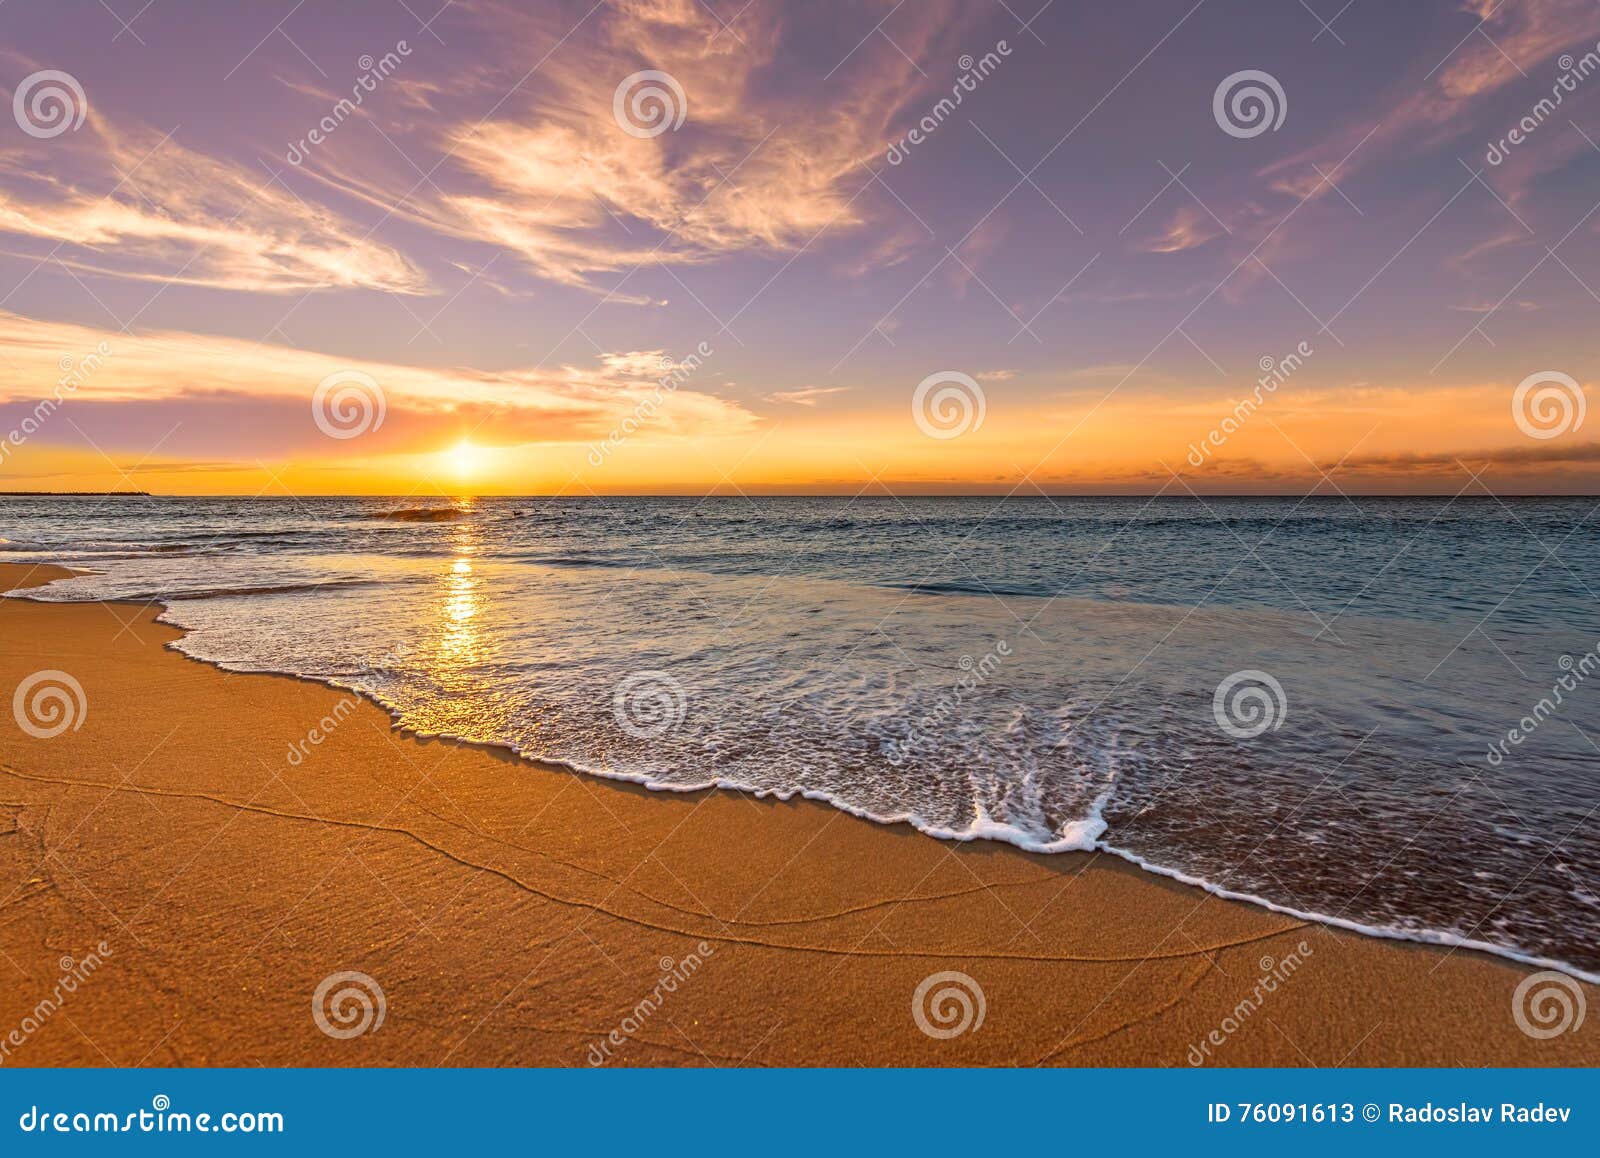 ocean beach sunrise.